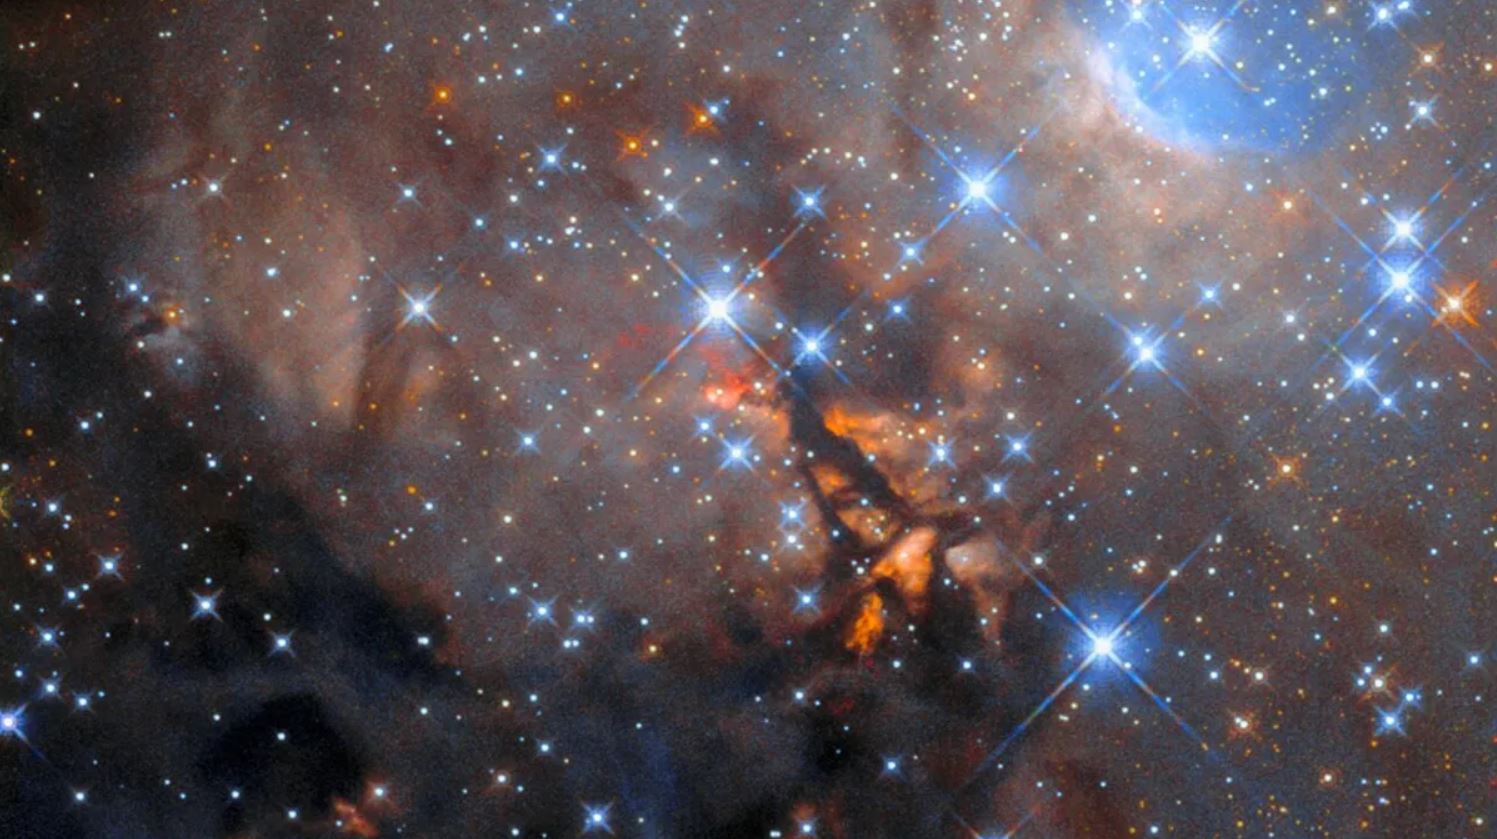 Star-studded stellar nursery shines in new Hubble Telescope photo